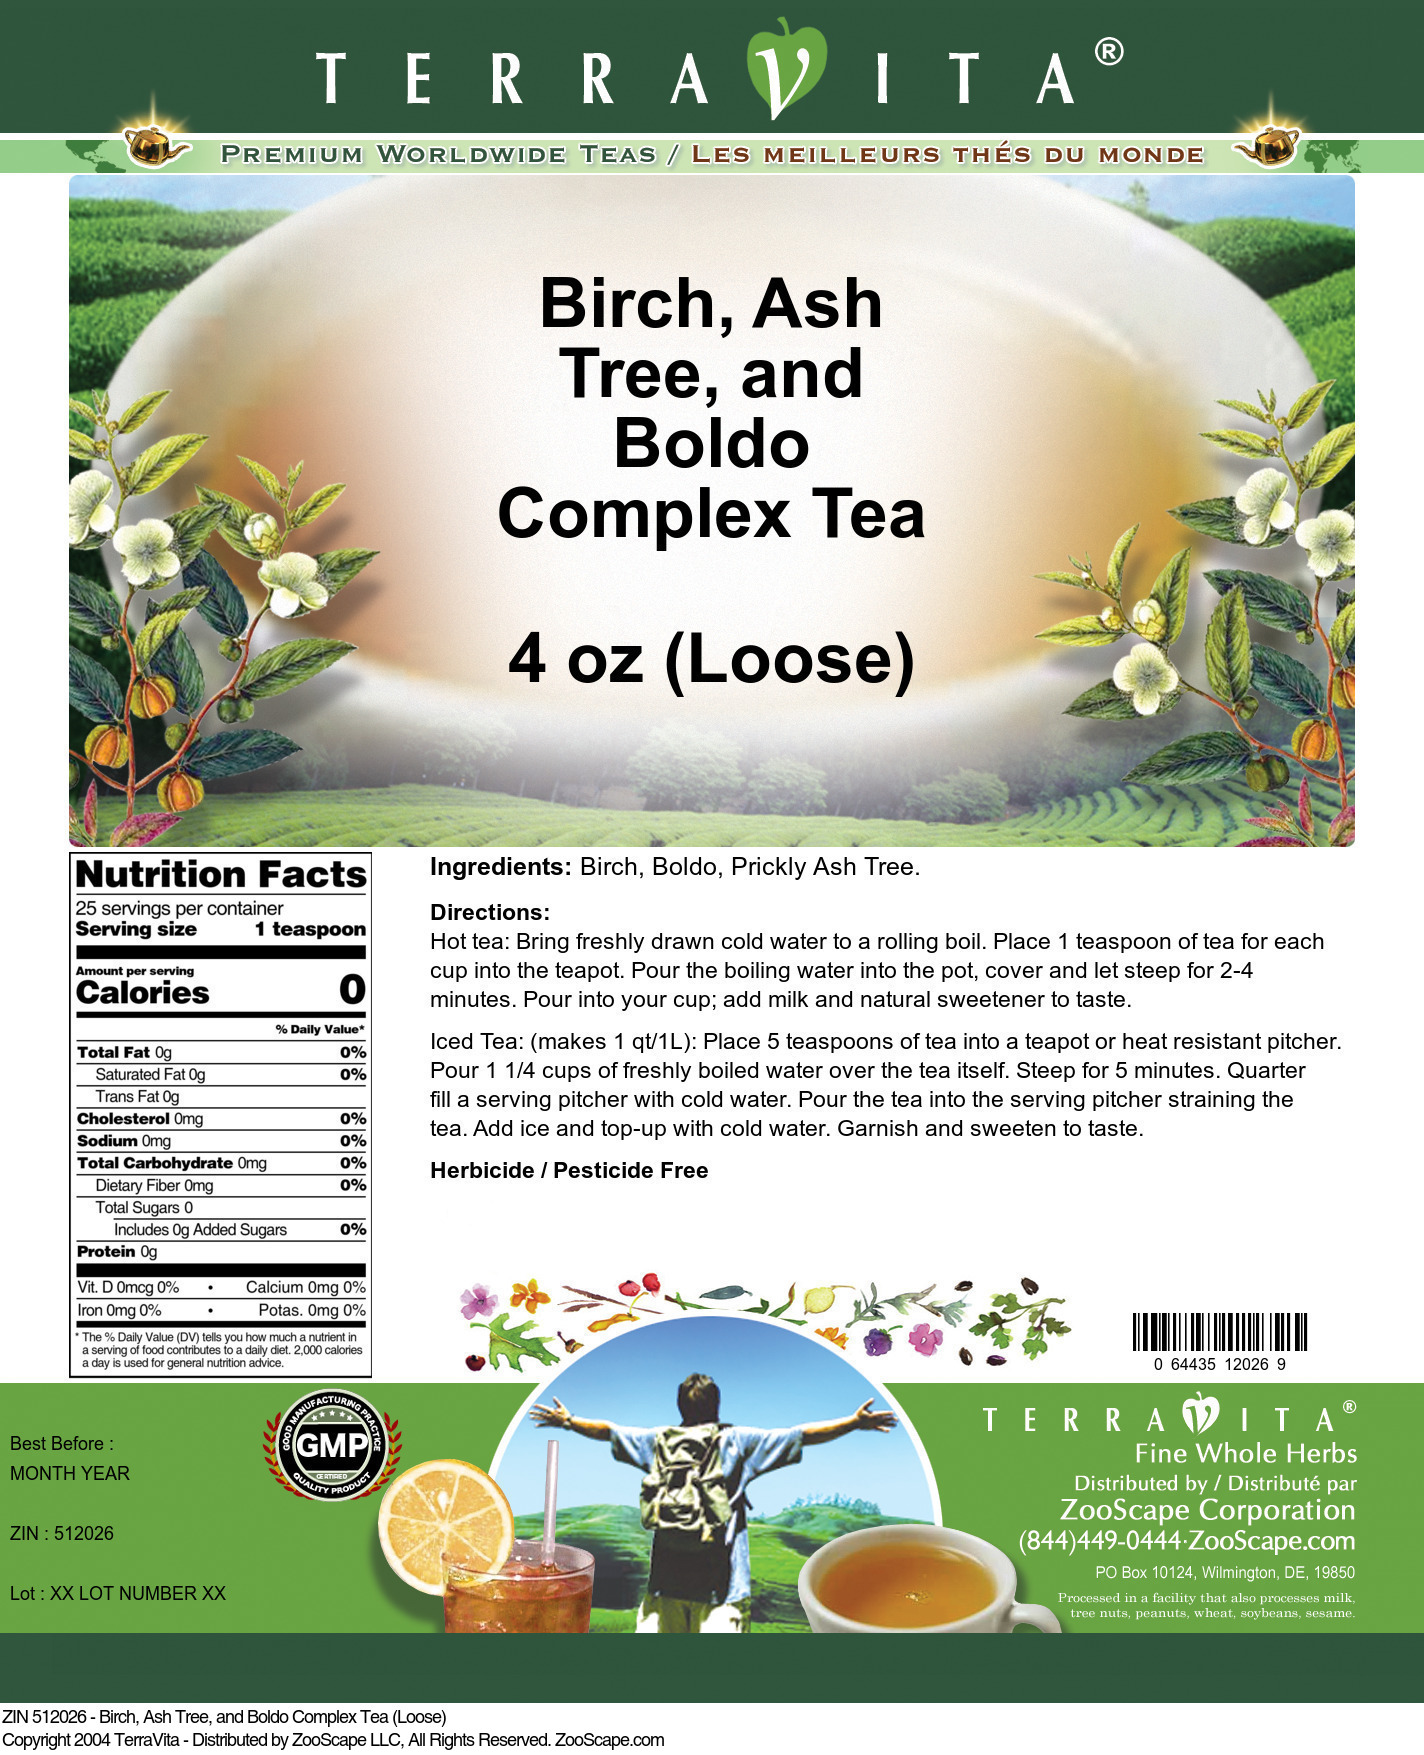 Birch, Ash Tree, and Boldo Complex Tea (Loose) - Label